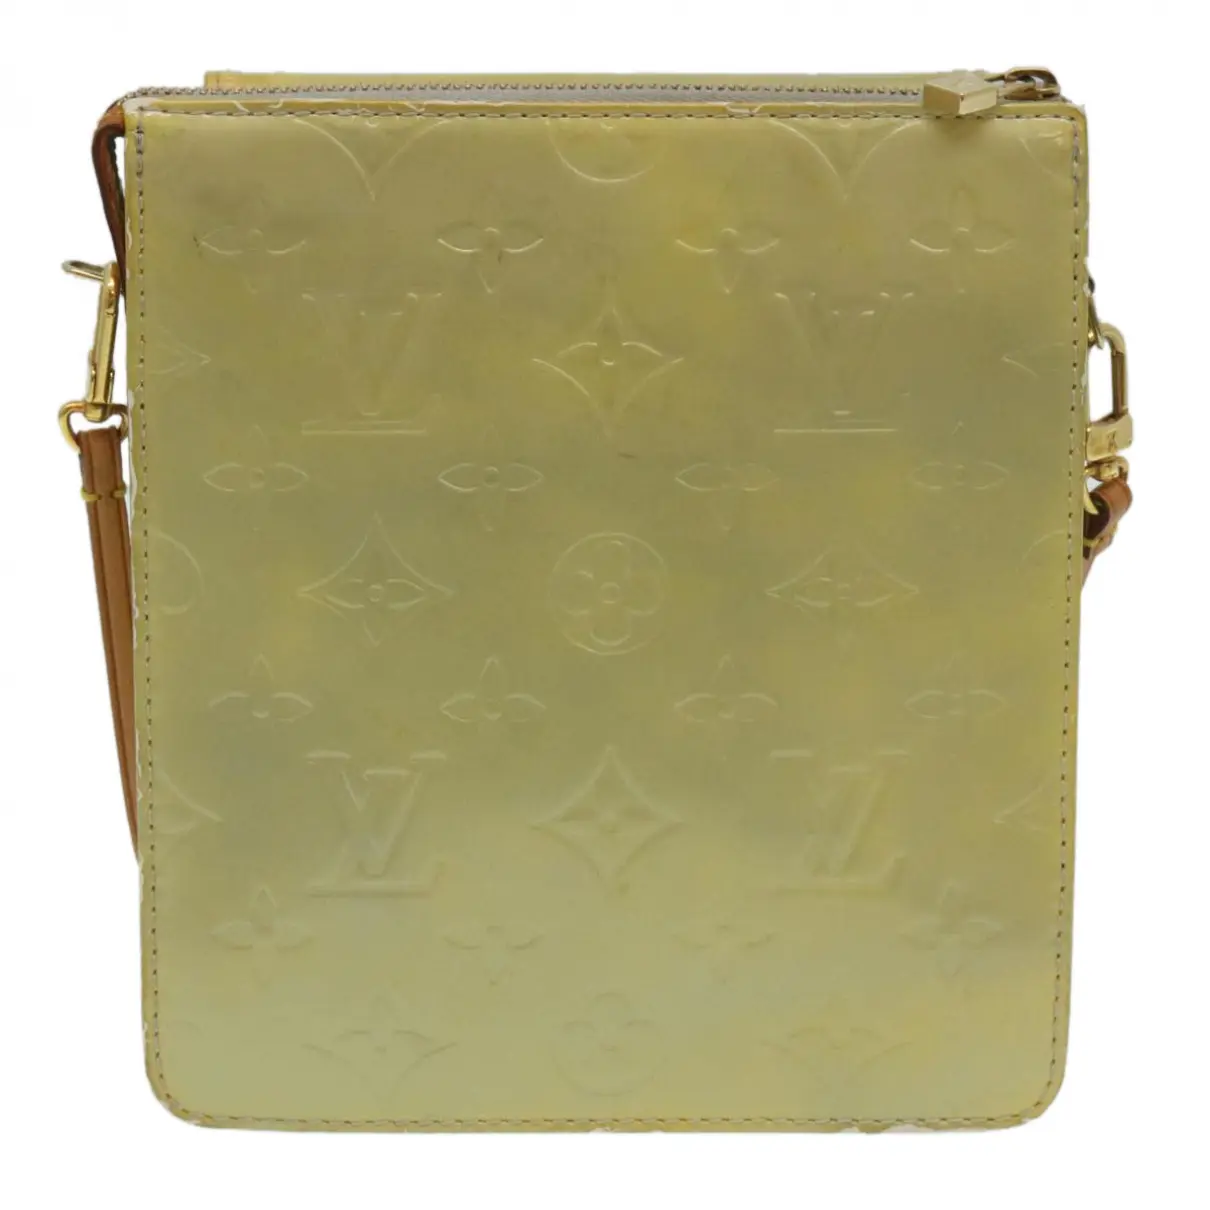 Buy Louis Vuitton Mott patent leather handbag online